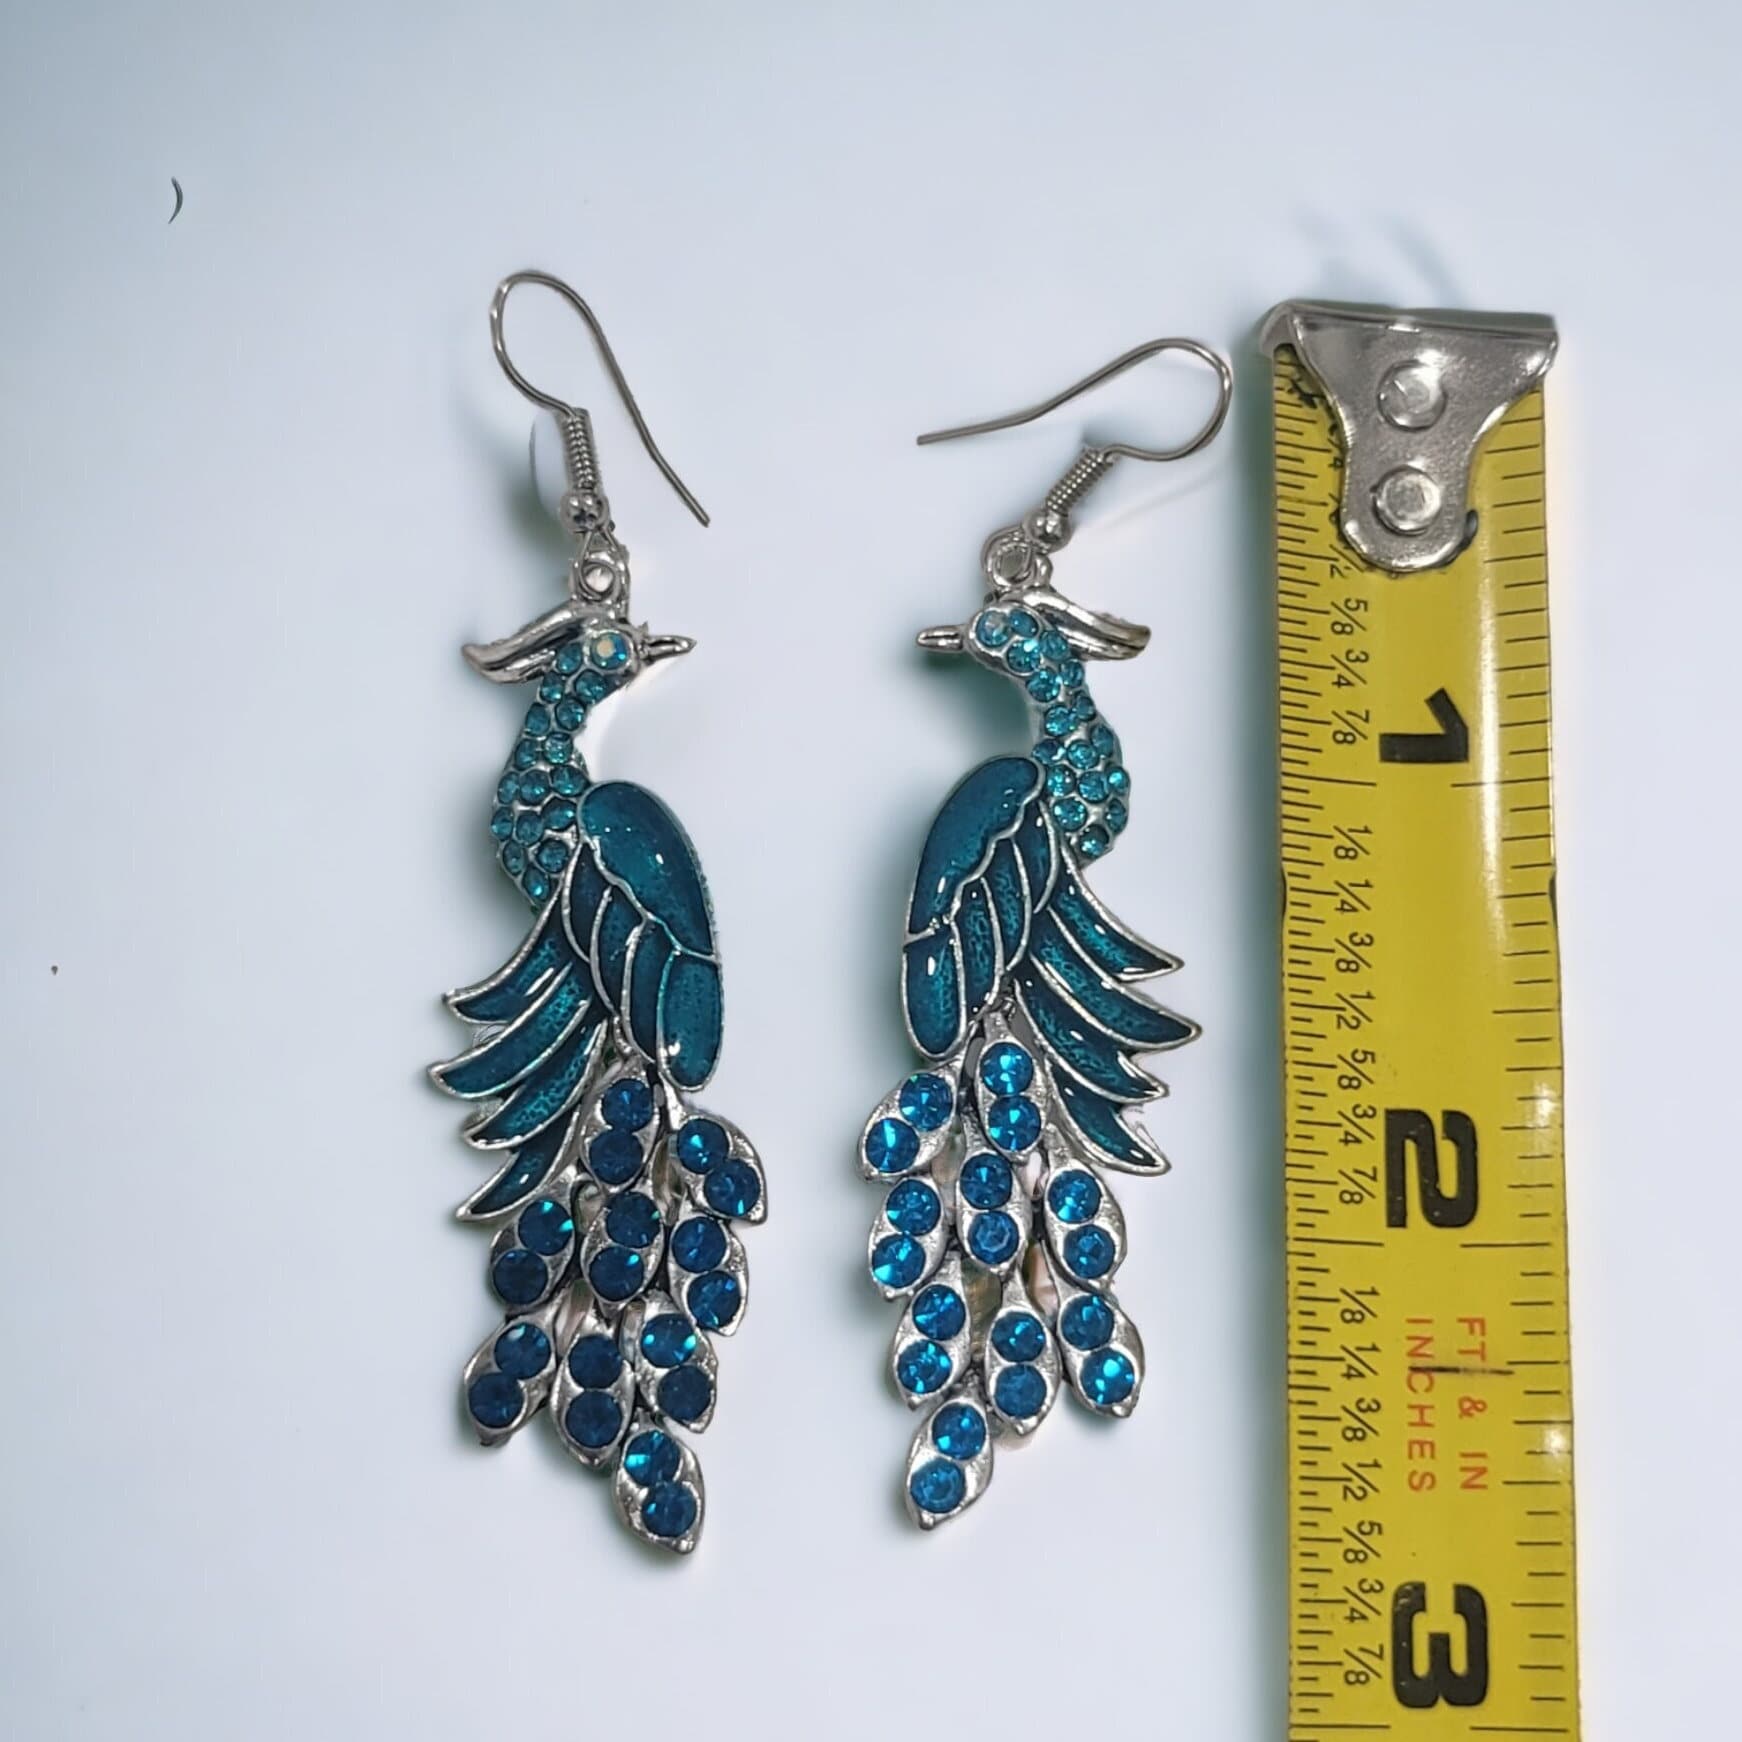 Blue peacock rhinestone earrings silver dangle hook